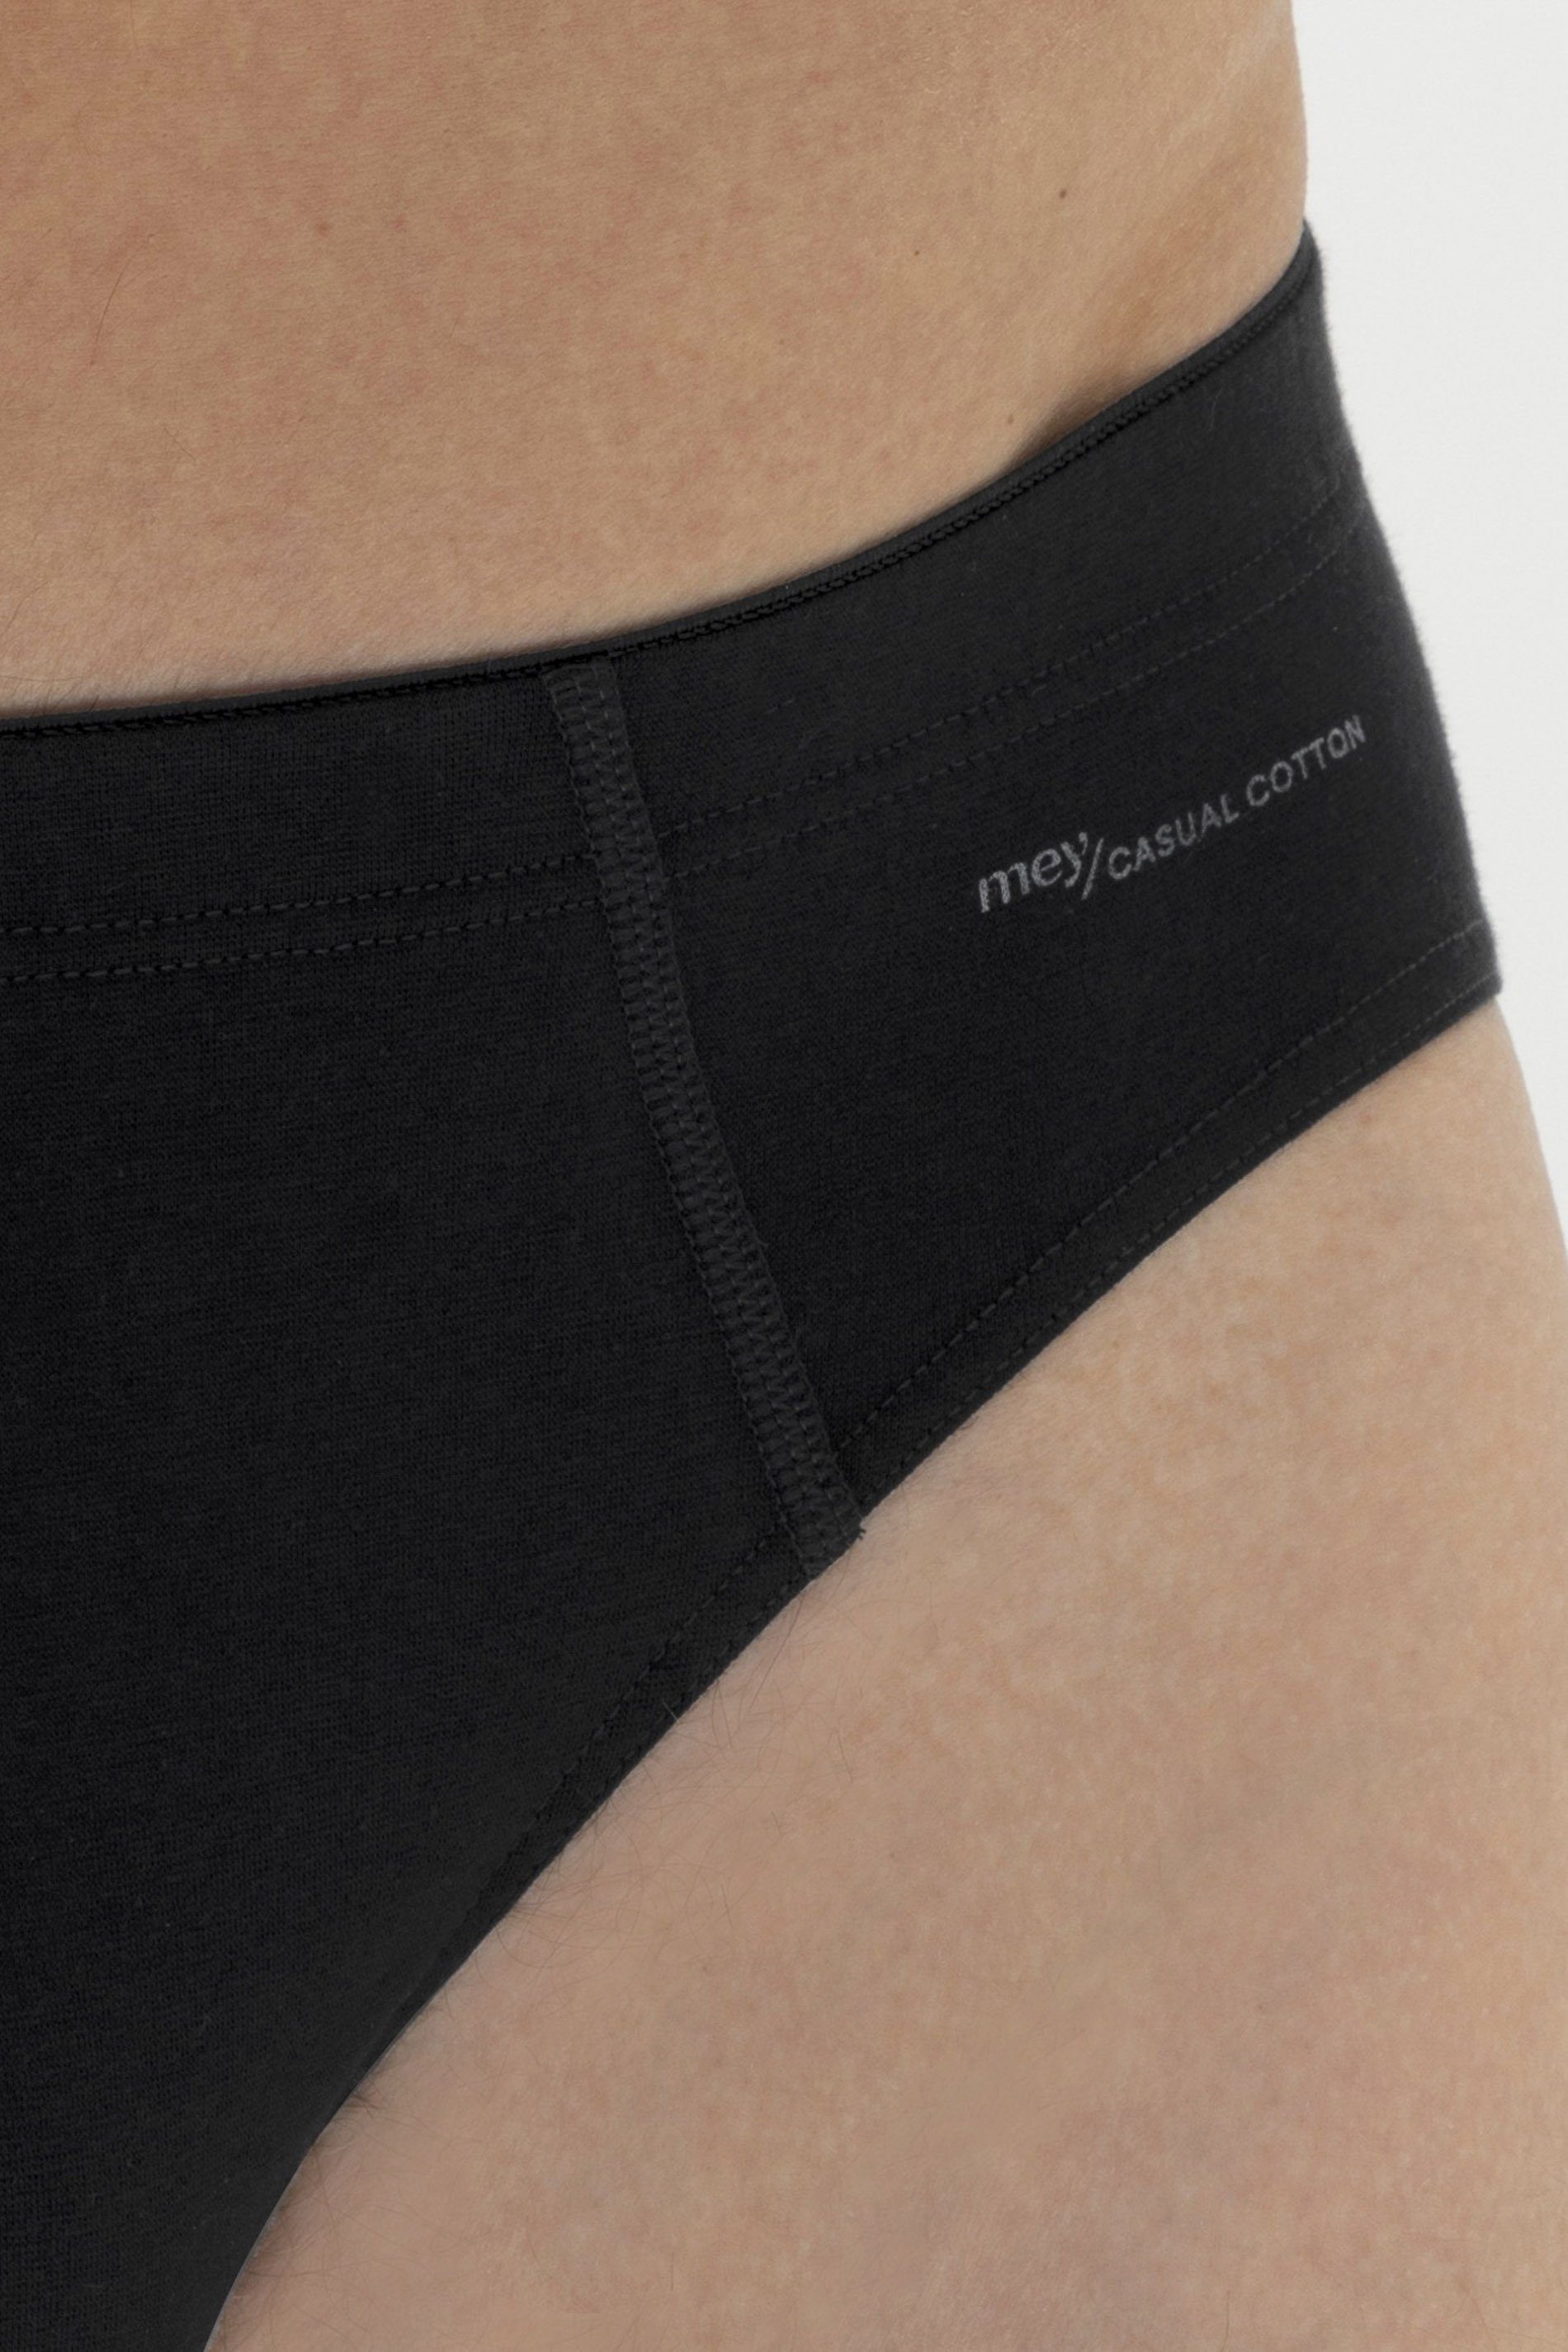 Mey Jazz-Pants Slips Casual Uni (1er-Pack) Schwarz Serie Cotton